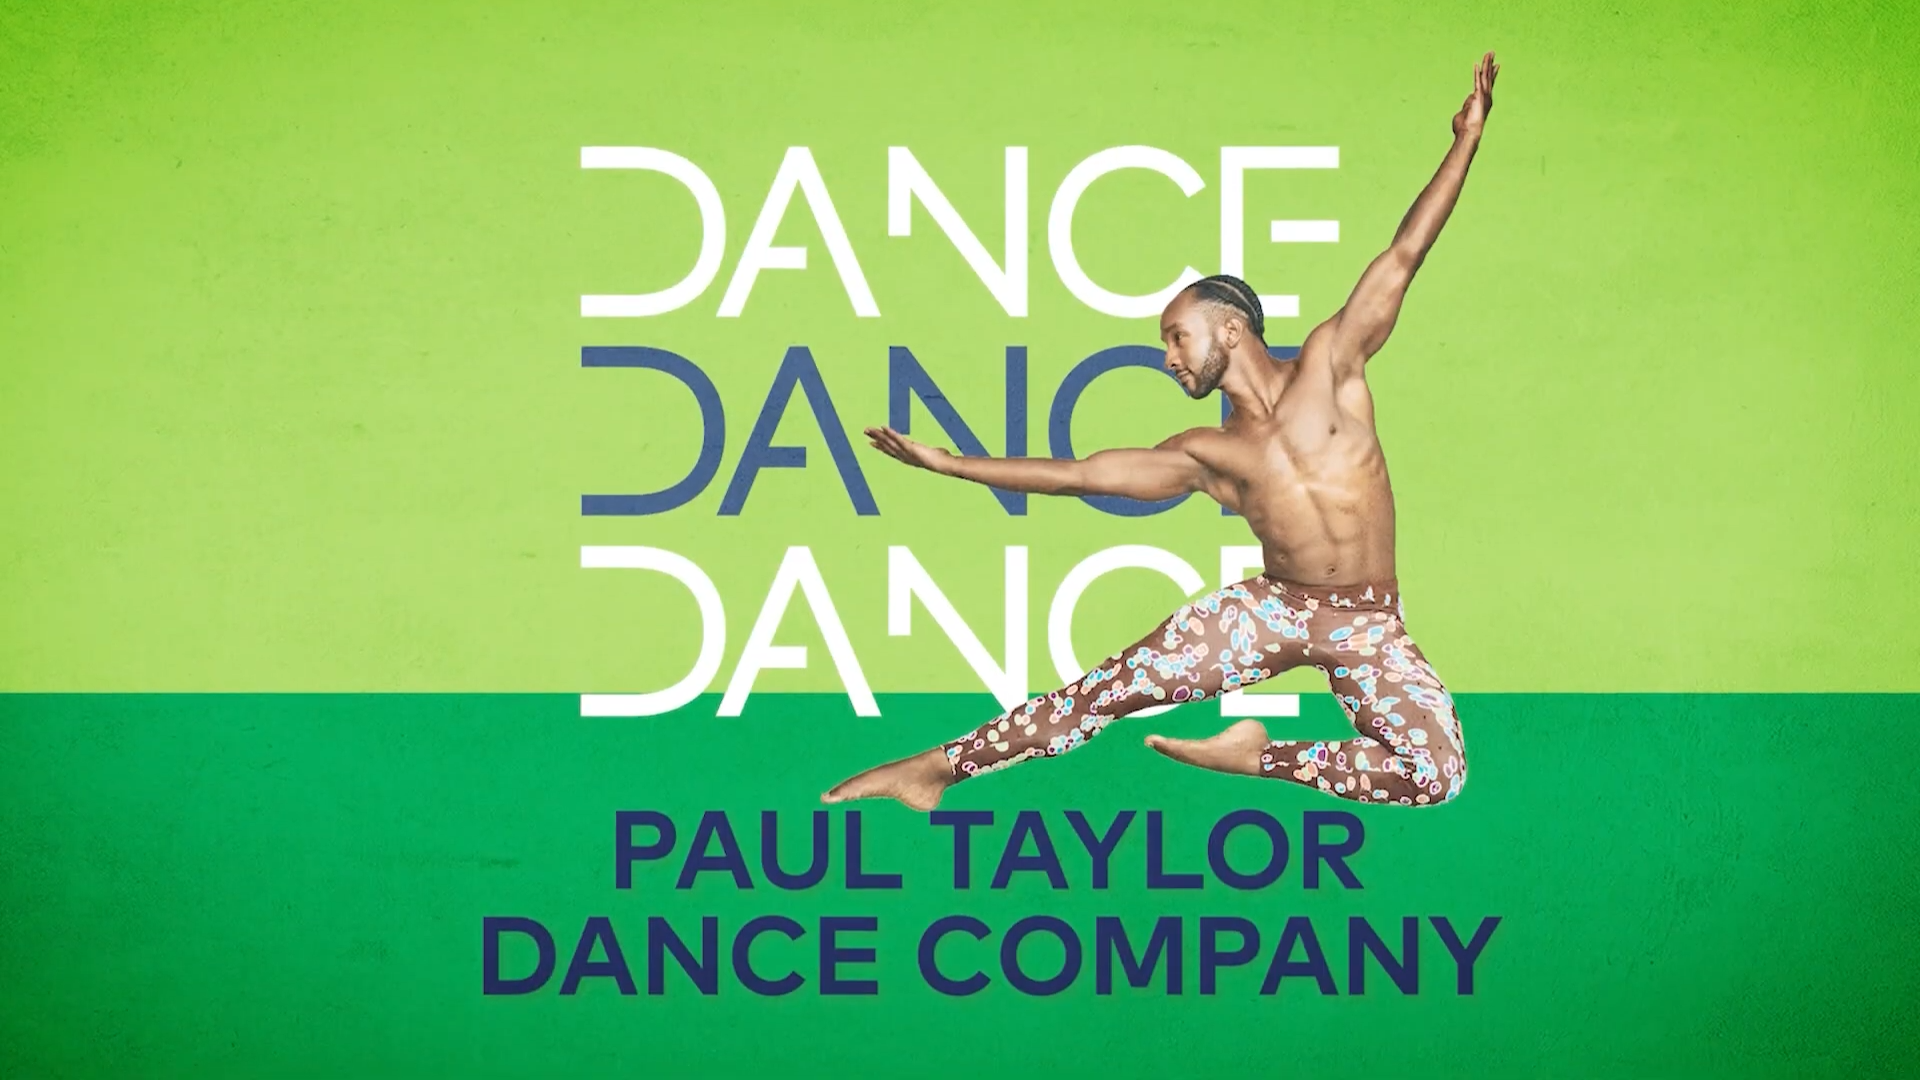 Paul Taylor Dance Company Kicks Off the 20th Dance Season